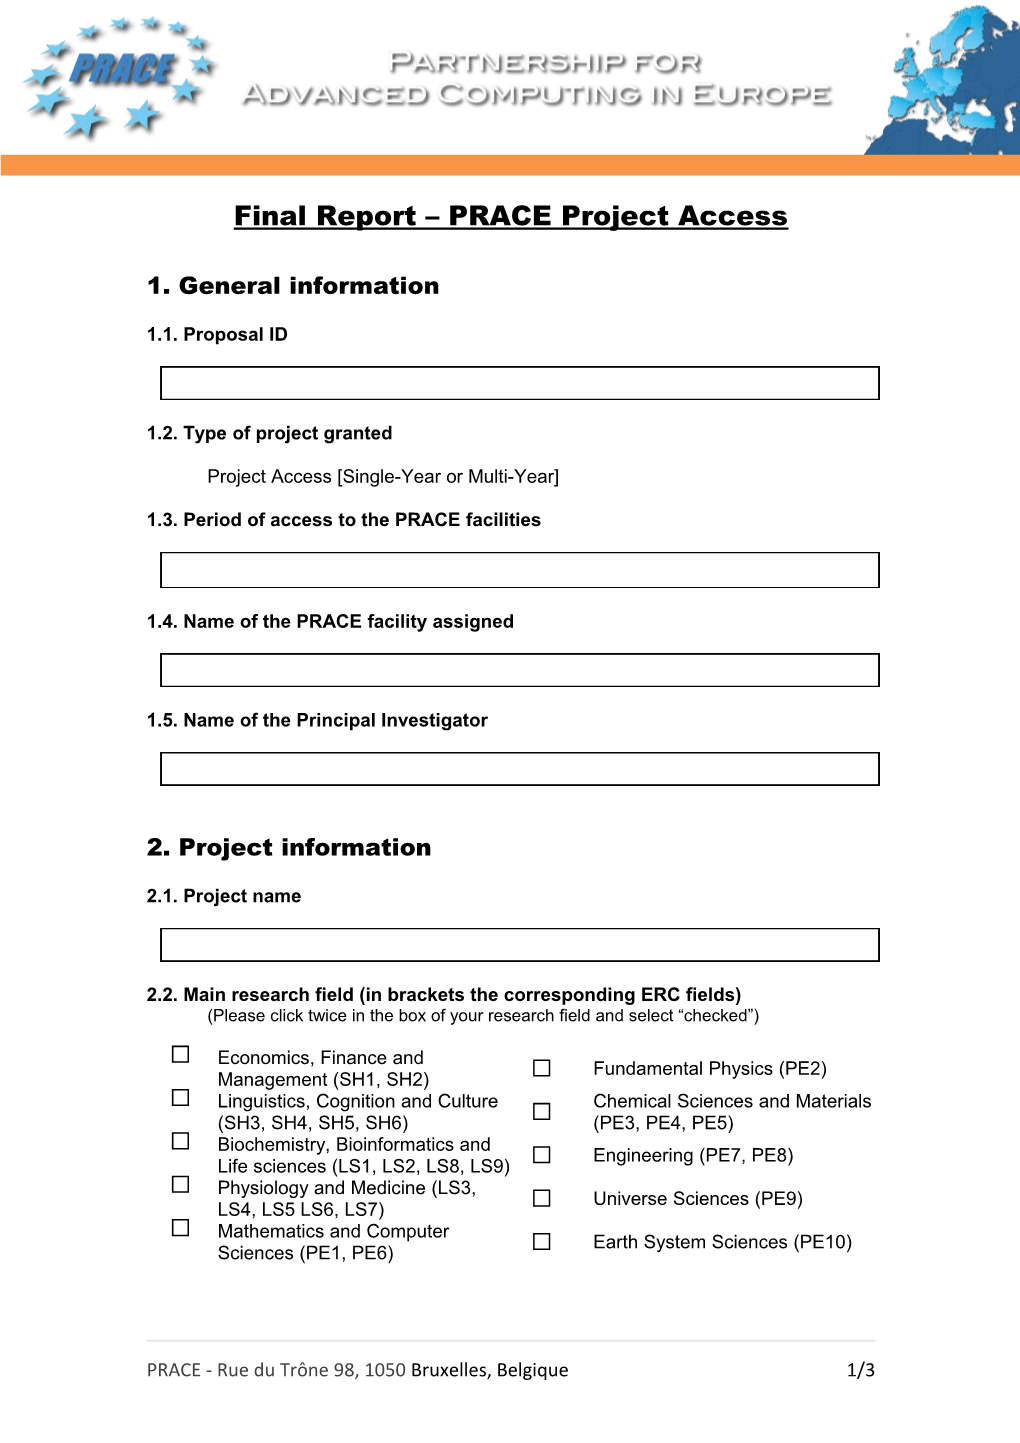 Final Report PRACE Project Access